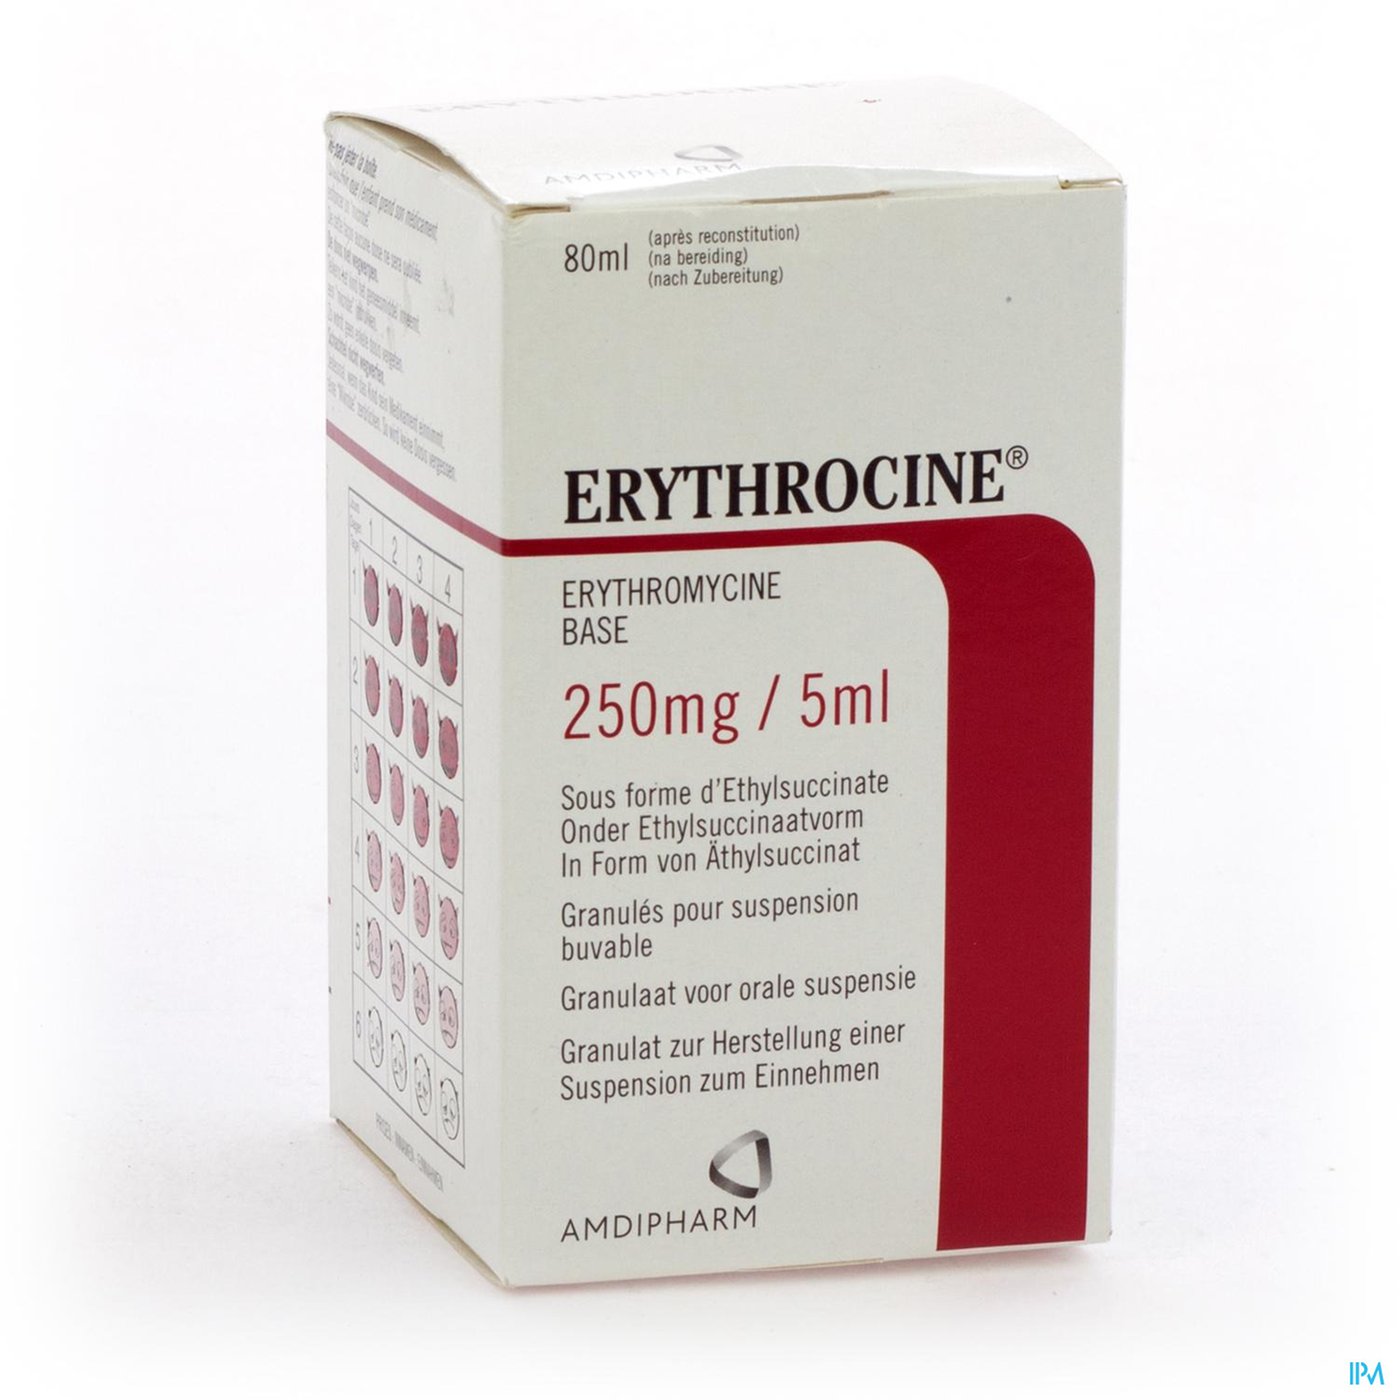 Erythrocine Sir 1 X 80ml 250mg/5ml